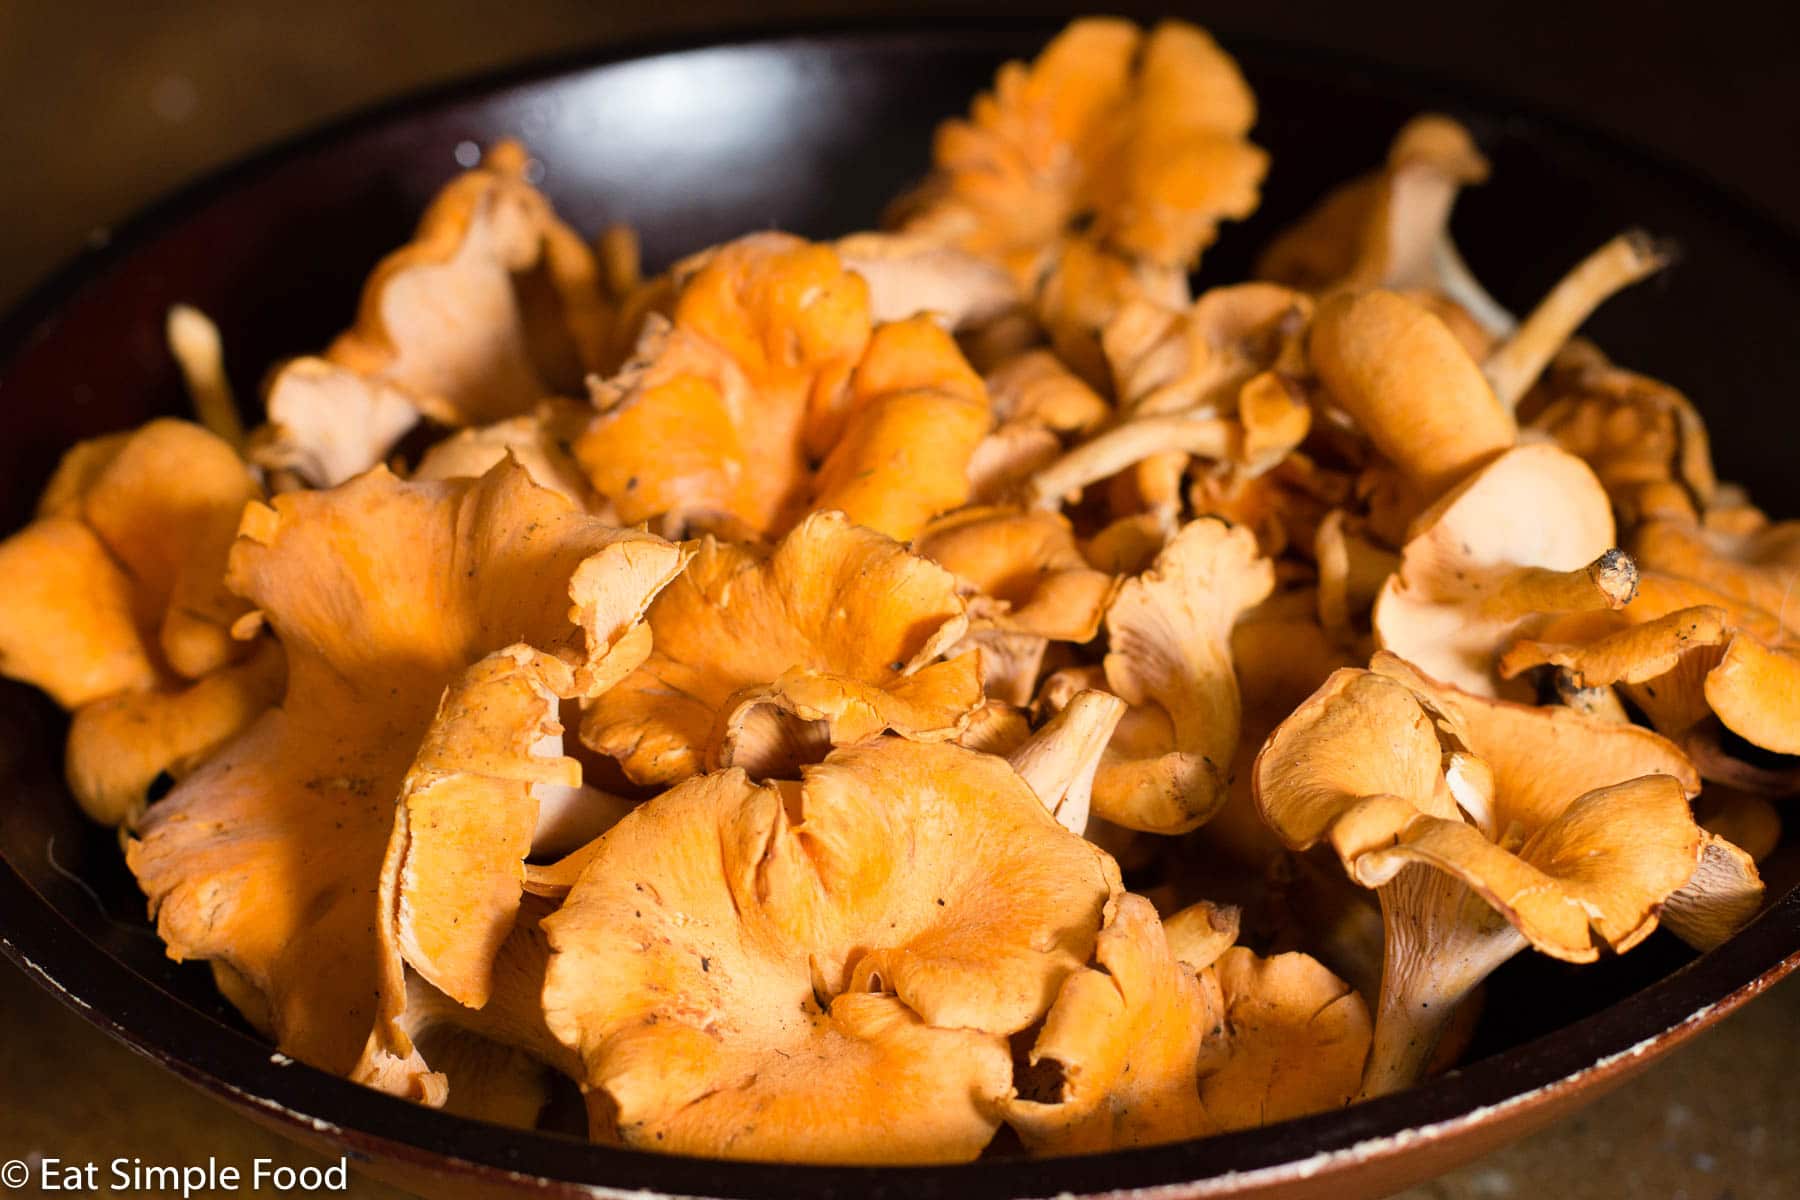 Raw Orange Chanterelle Mushrooms In A Brown Bowl. close up